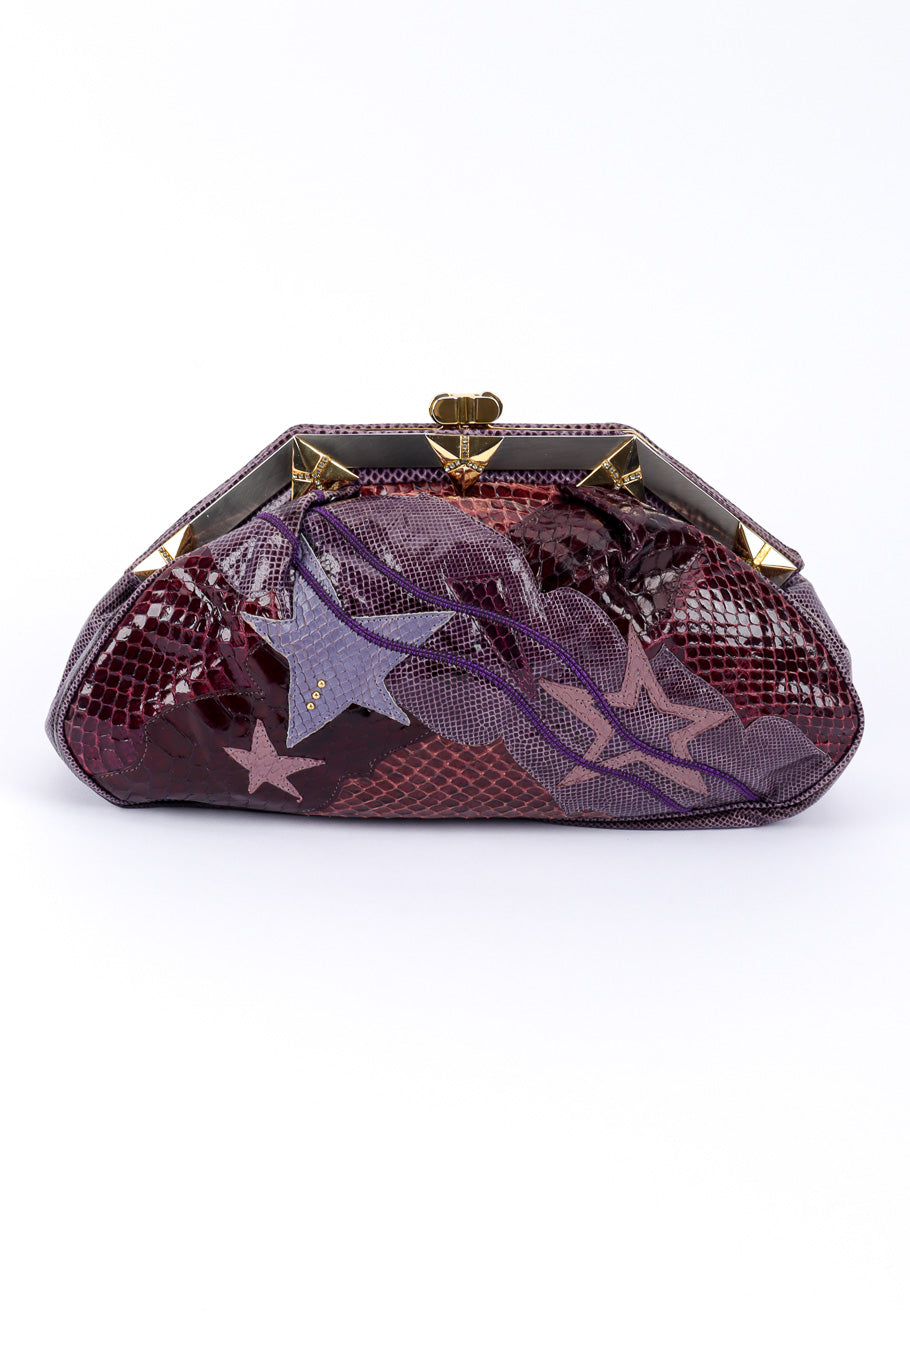 Snake & Lizard Star Collage Bag by Carlo Fiori front @recessla